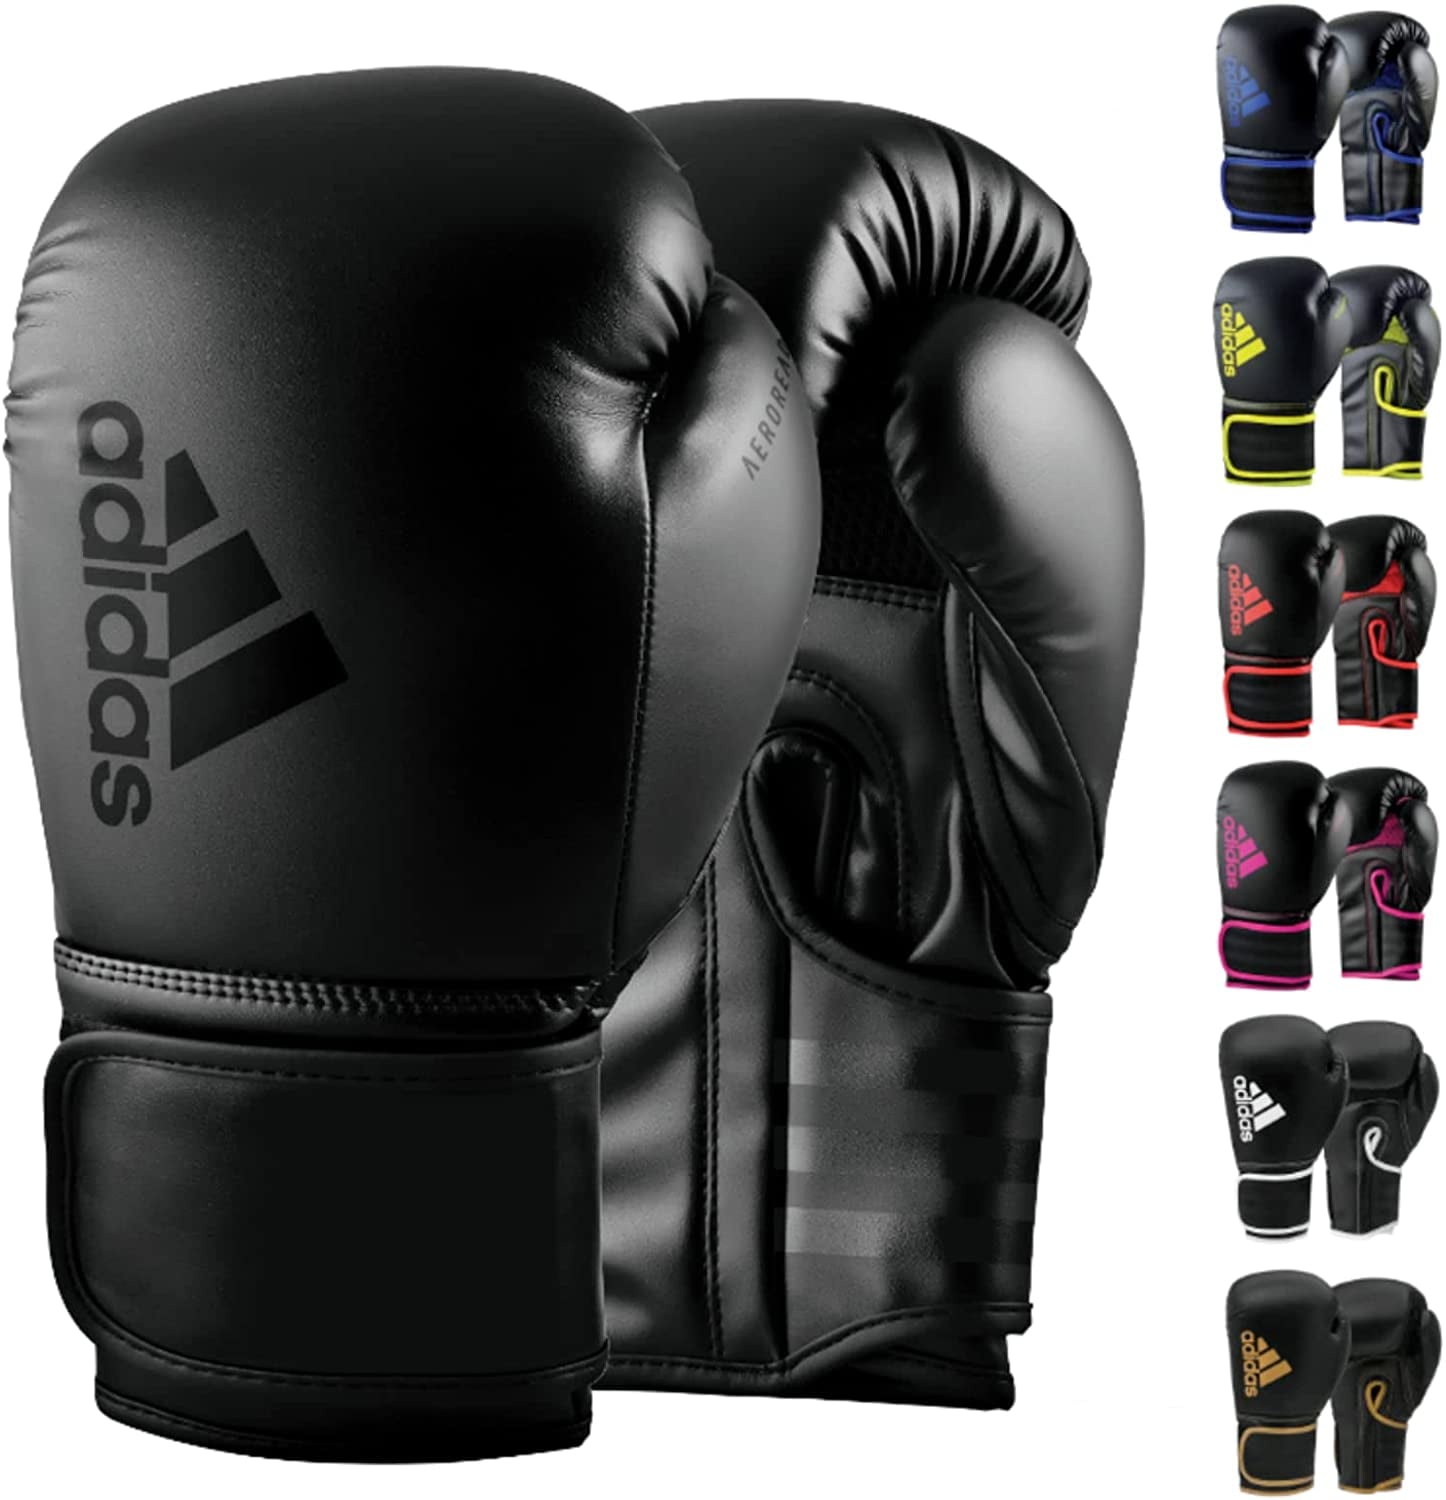 Adidas Hybrid 80 Boxing Gloves, pair set - Training Gloves for Kickboxing - Sparring  Gloves for Men, Women and Kids